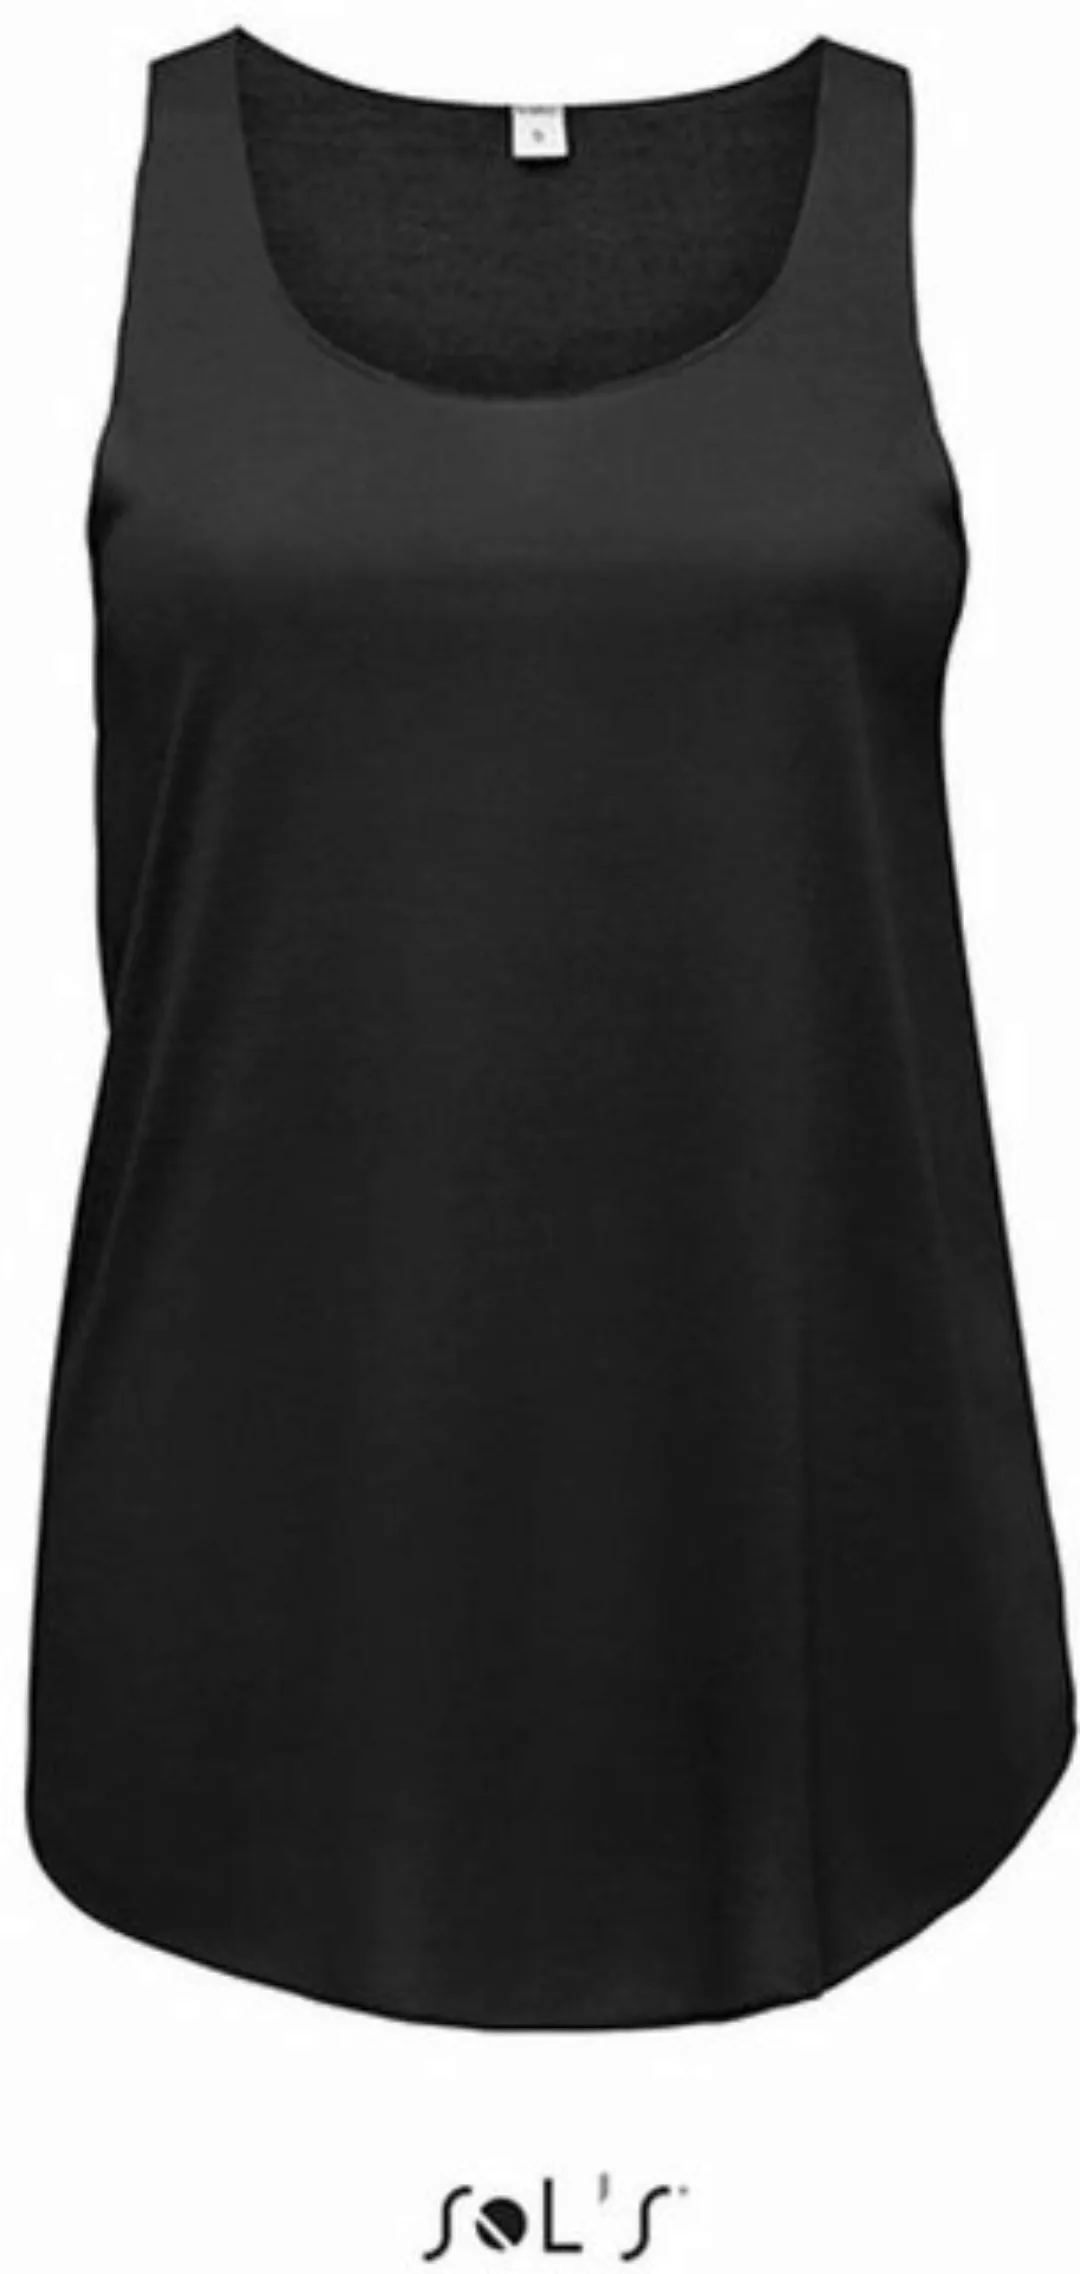 SOLS Tanktop Damen Jade T-Shirt, 130 Jersey, 100% Polyester günstig online kaufen